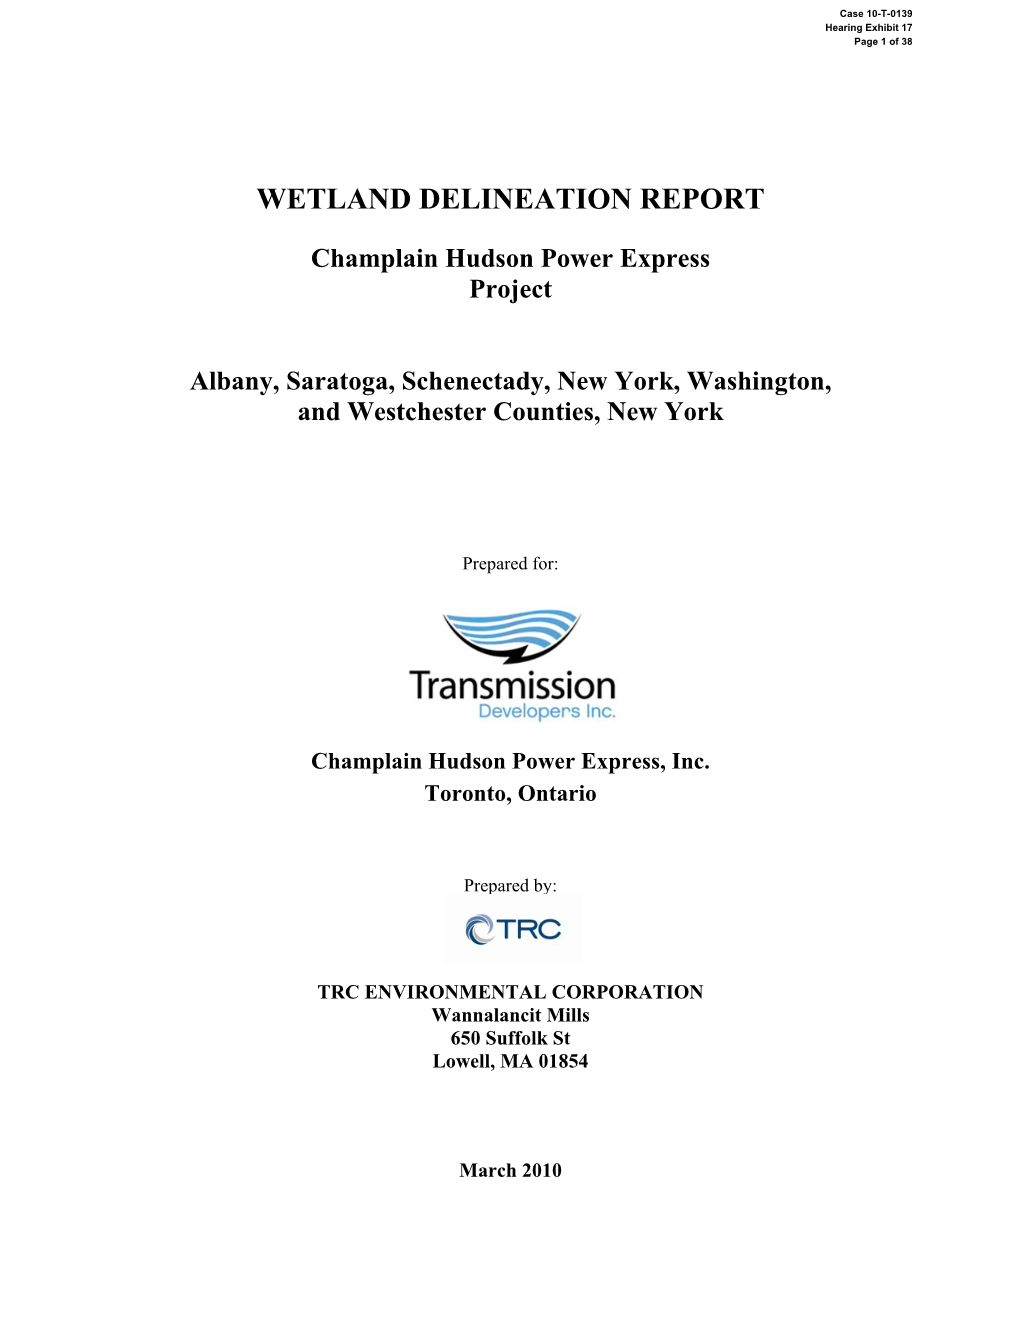 Wetland Jurisdictional Determination Report